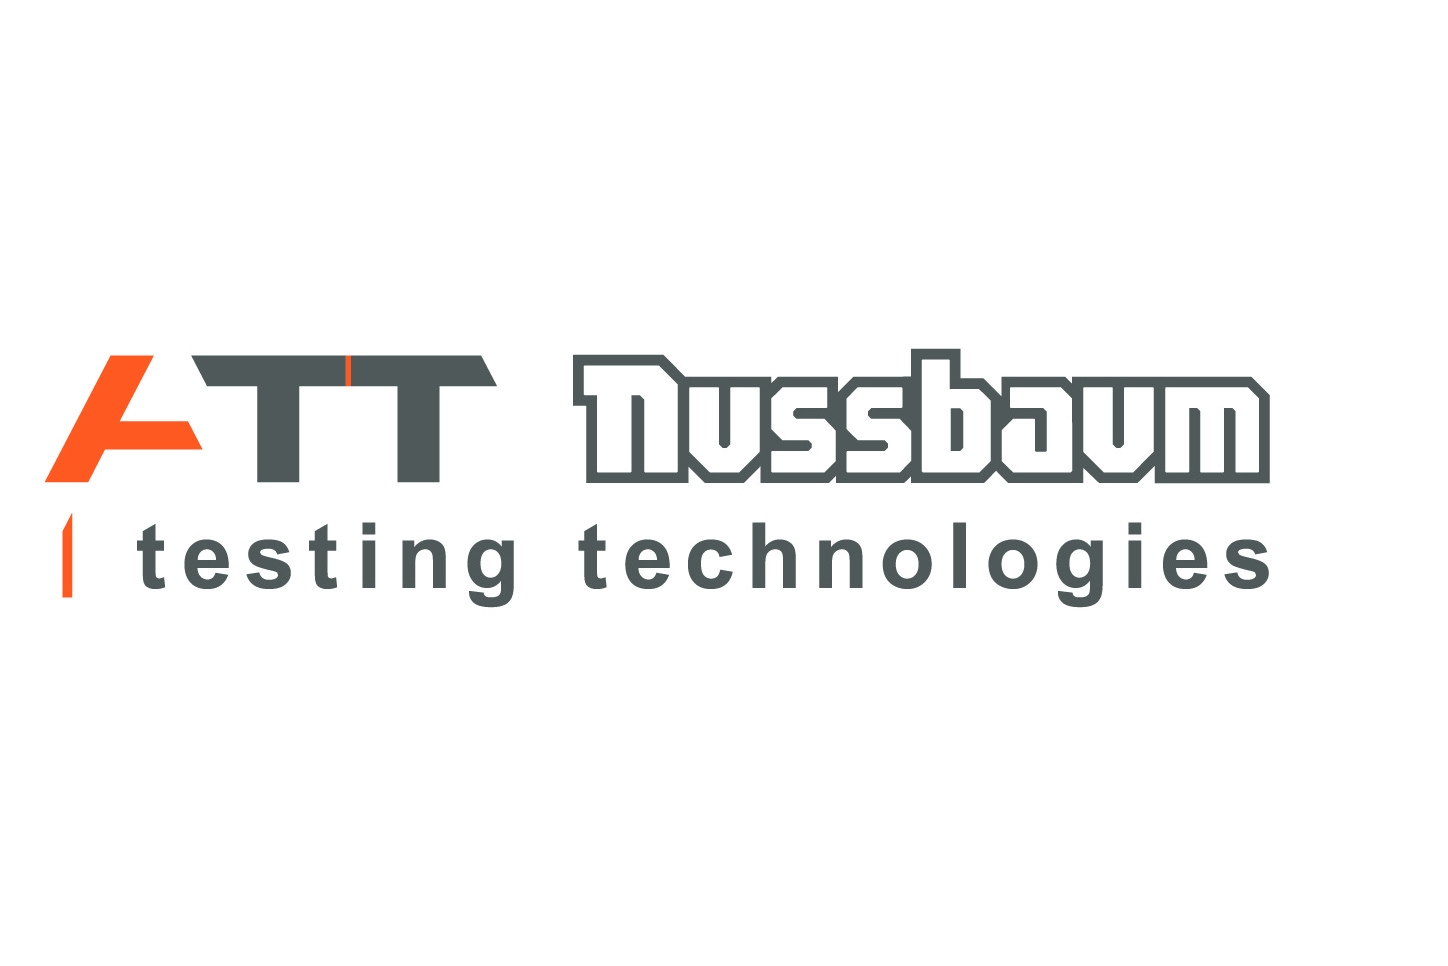 ATT_Nussbaum_Testing Technologies_CMYK 4x6